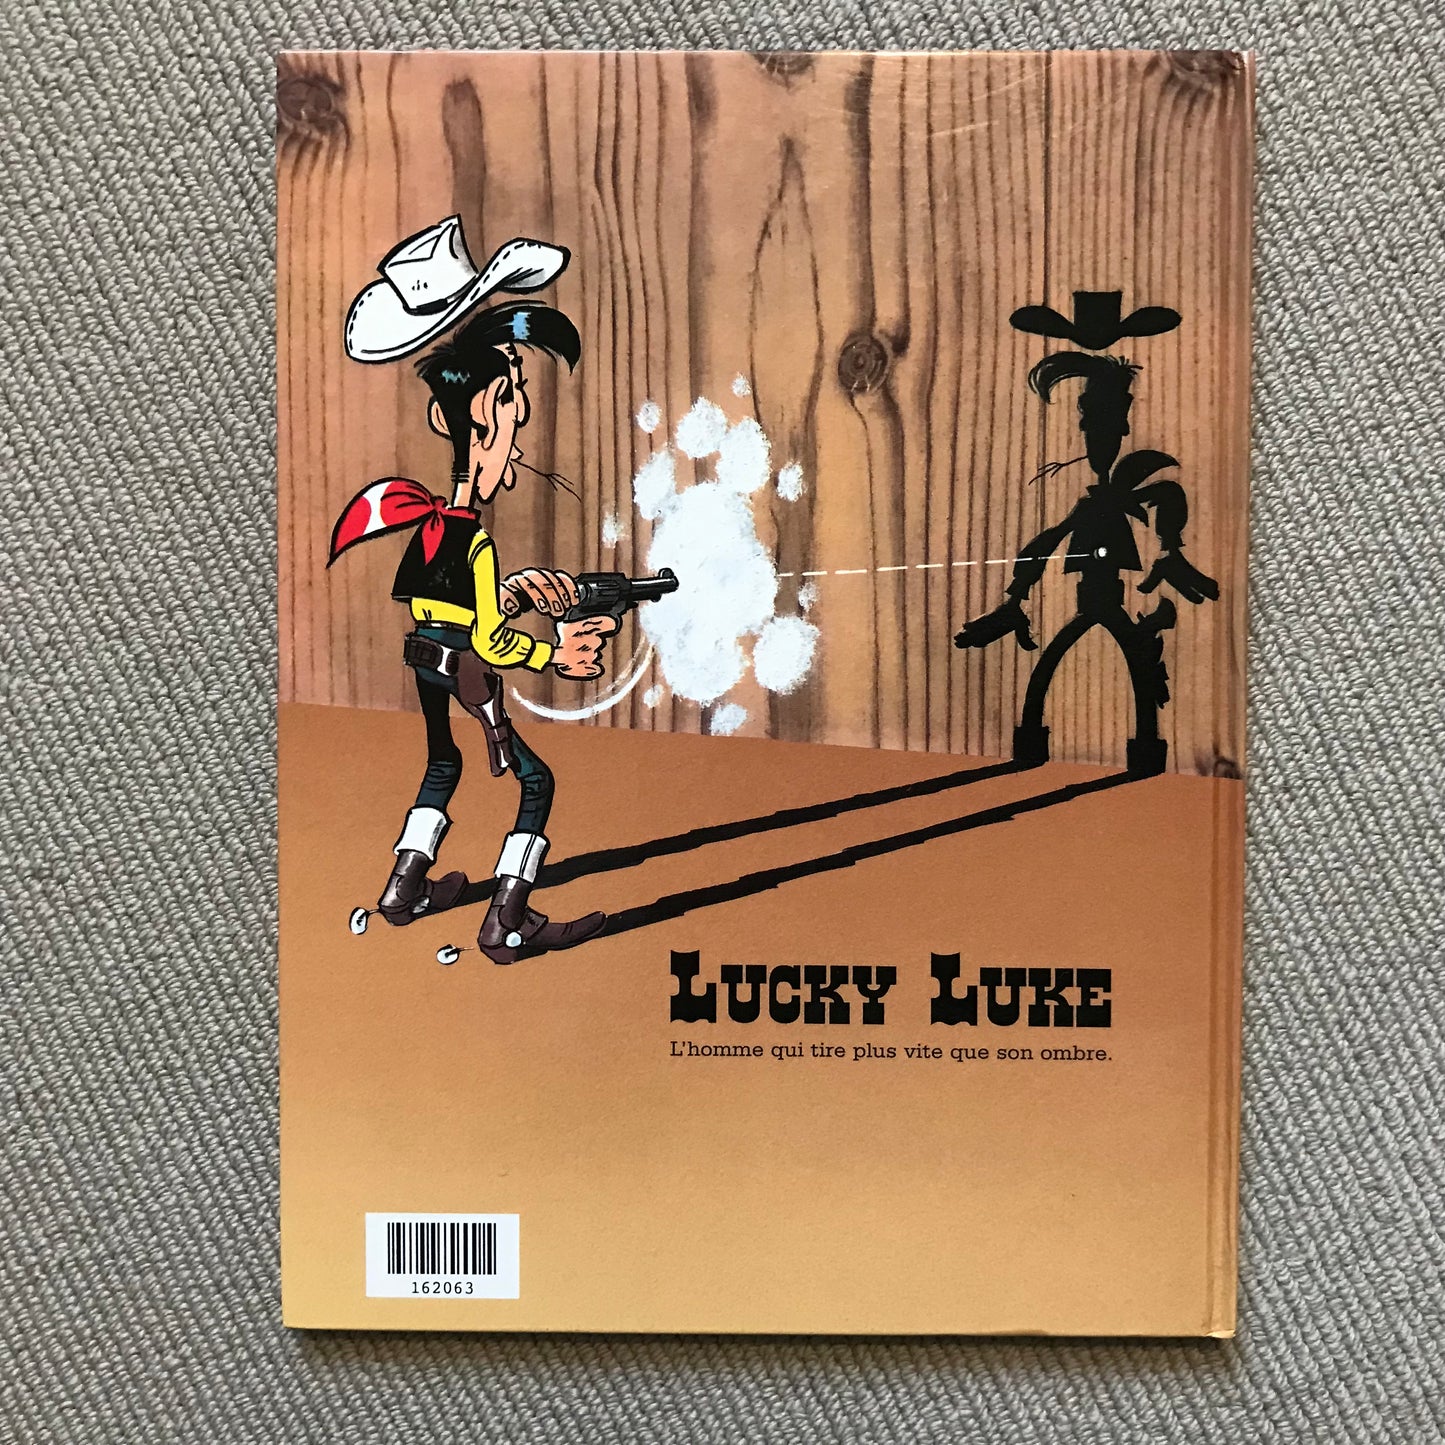 Lucky Luke T37, Canyon Apache - Morris & Goscinny